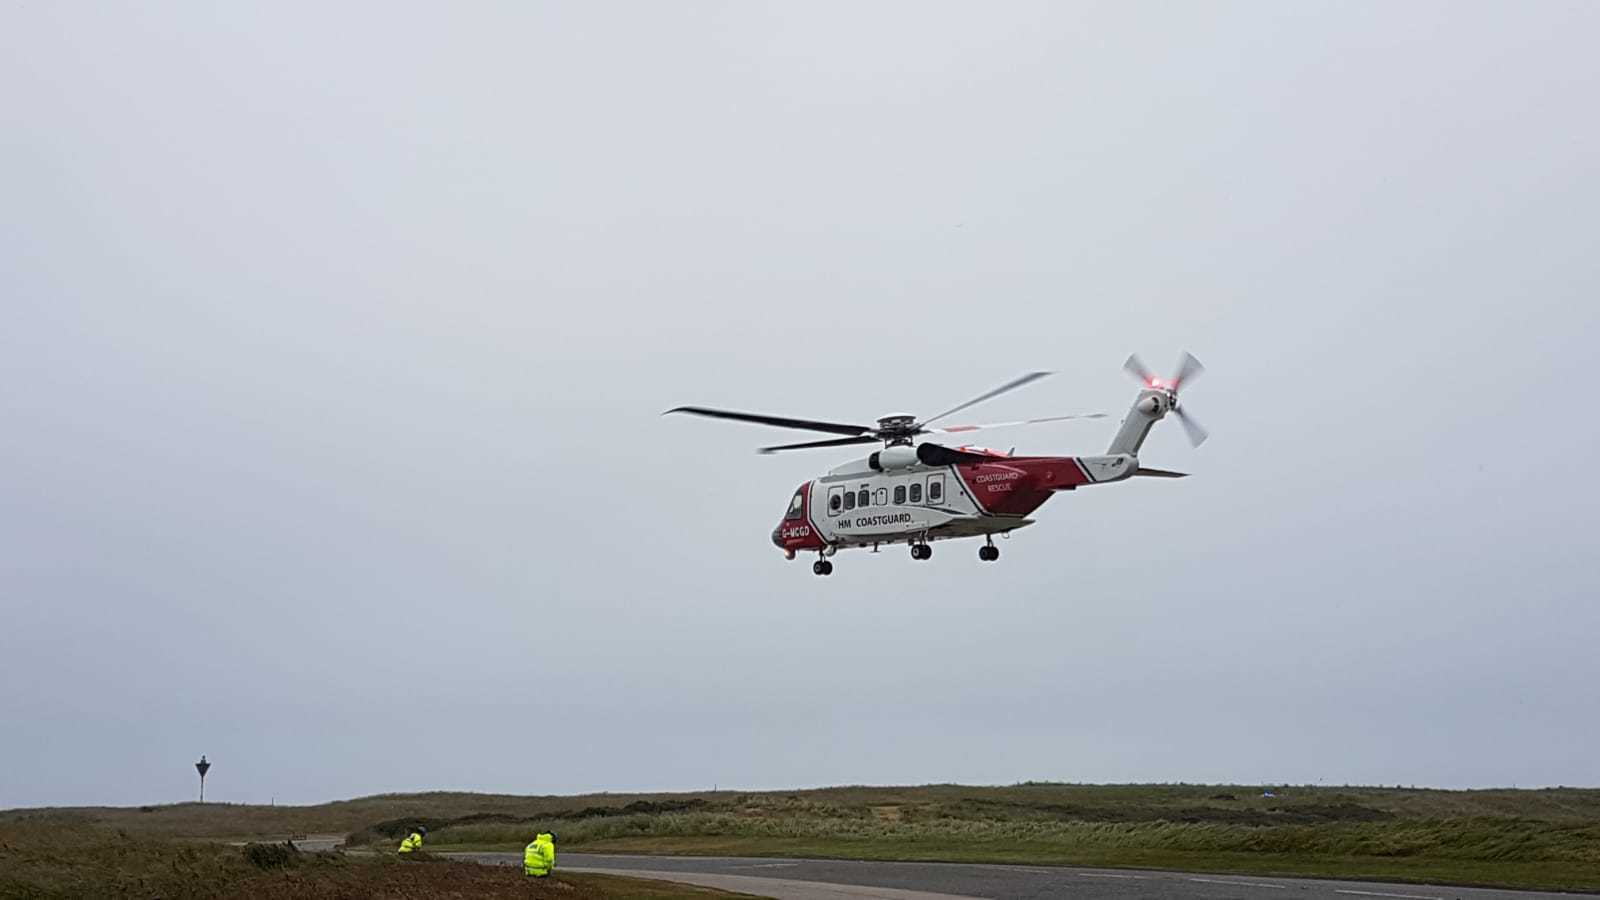 The coastguard helicopter